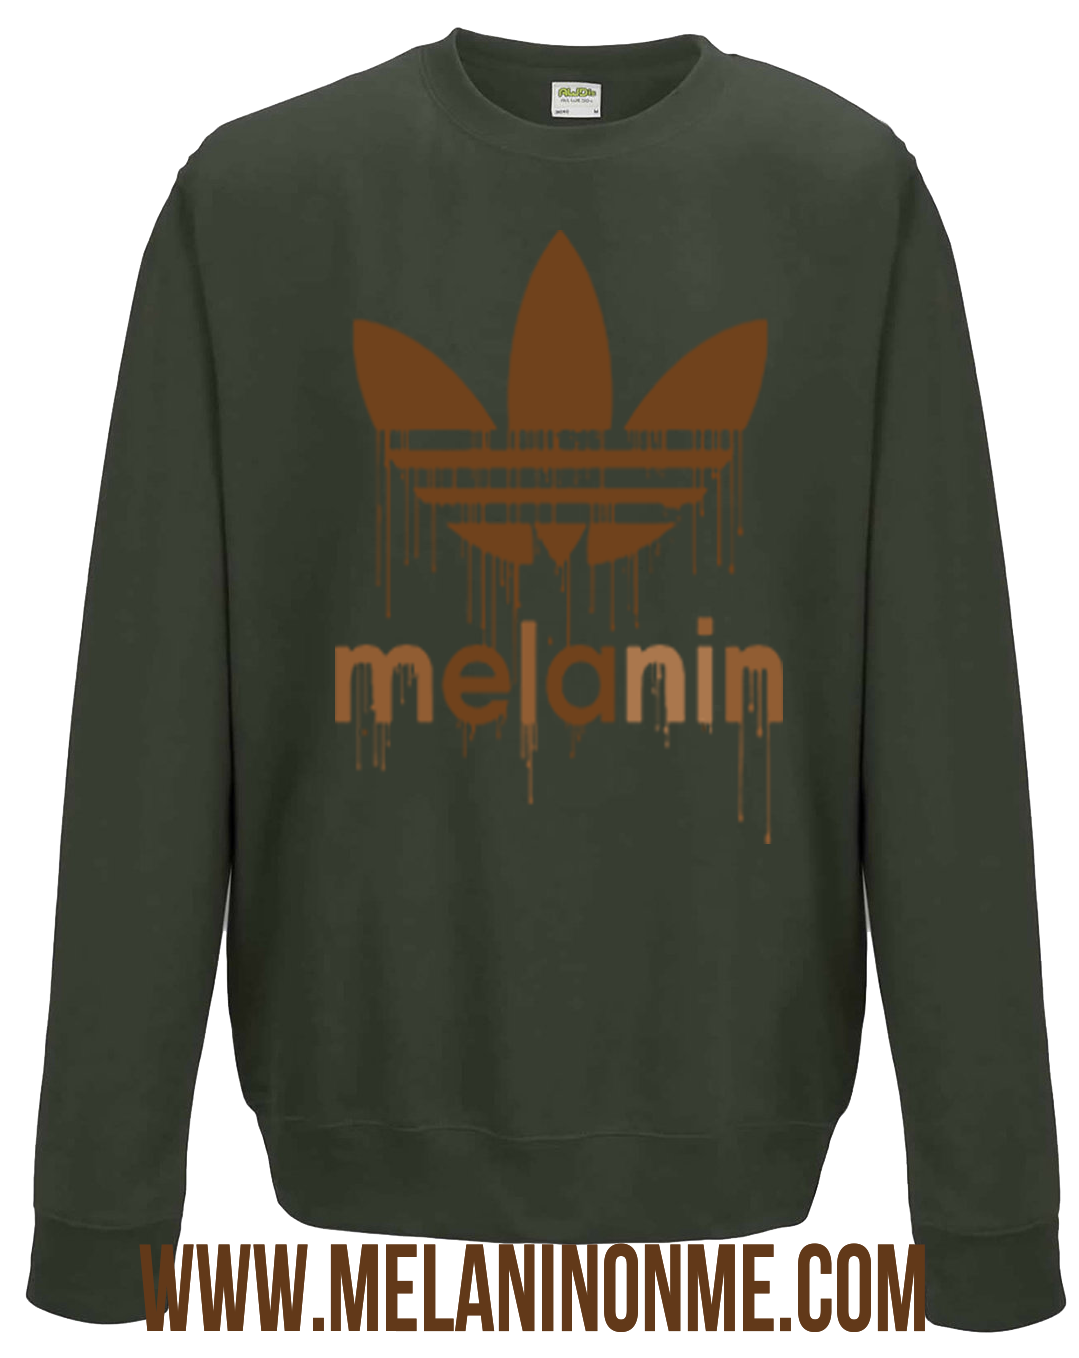 Melanin Adidas (Limited Edition) Sweatshirt